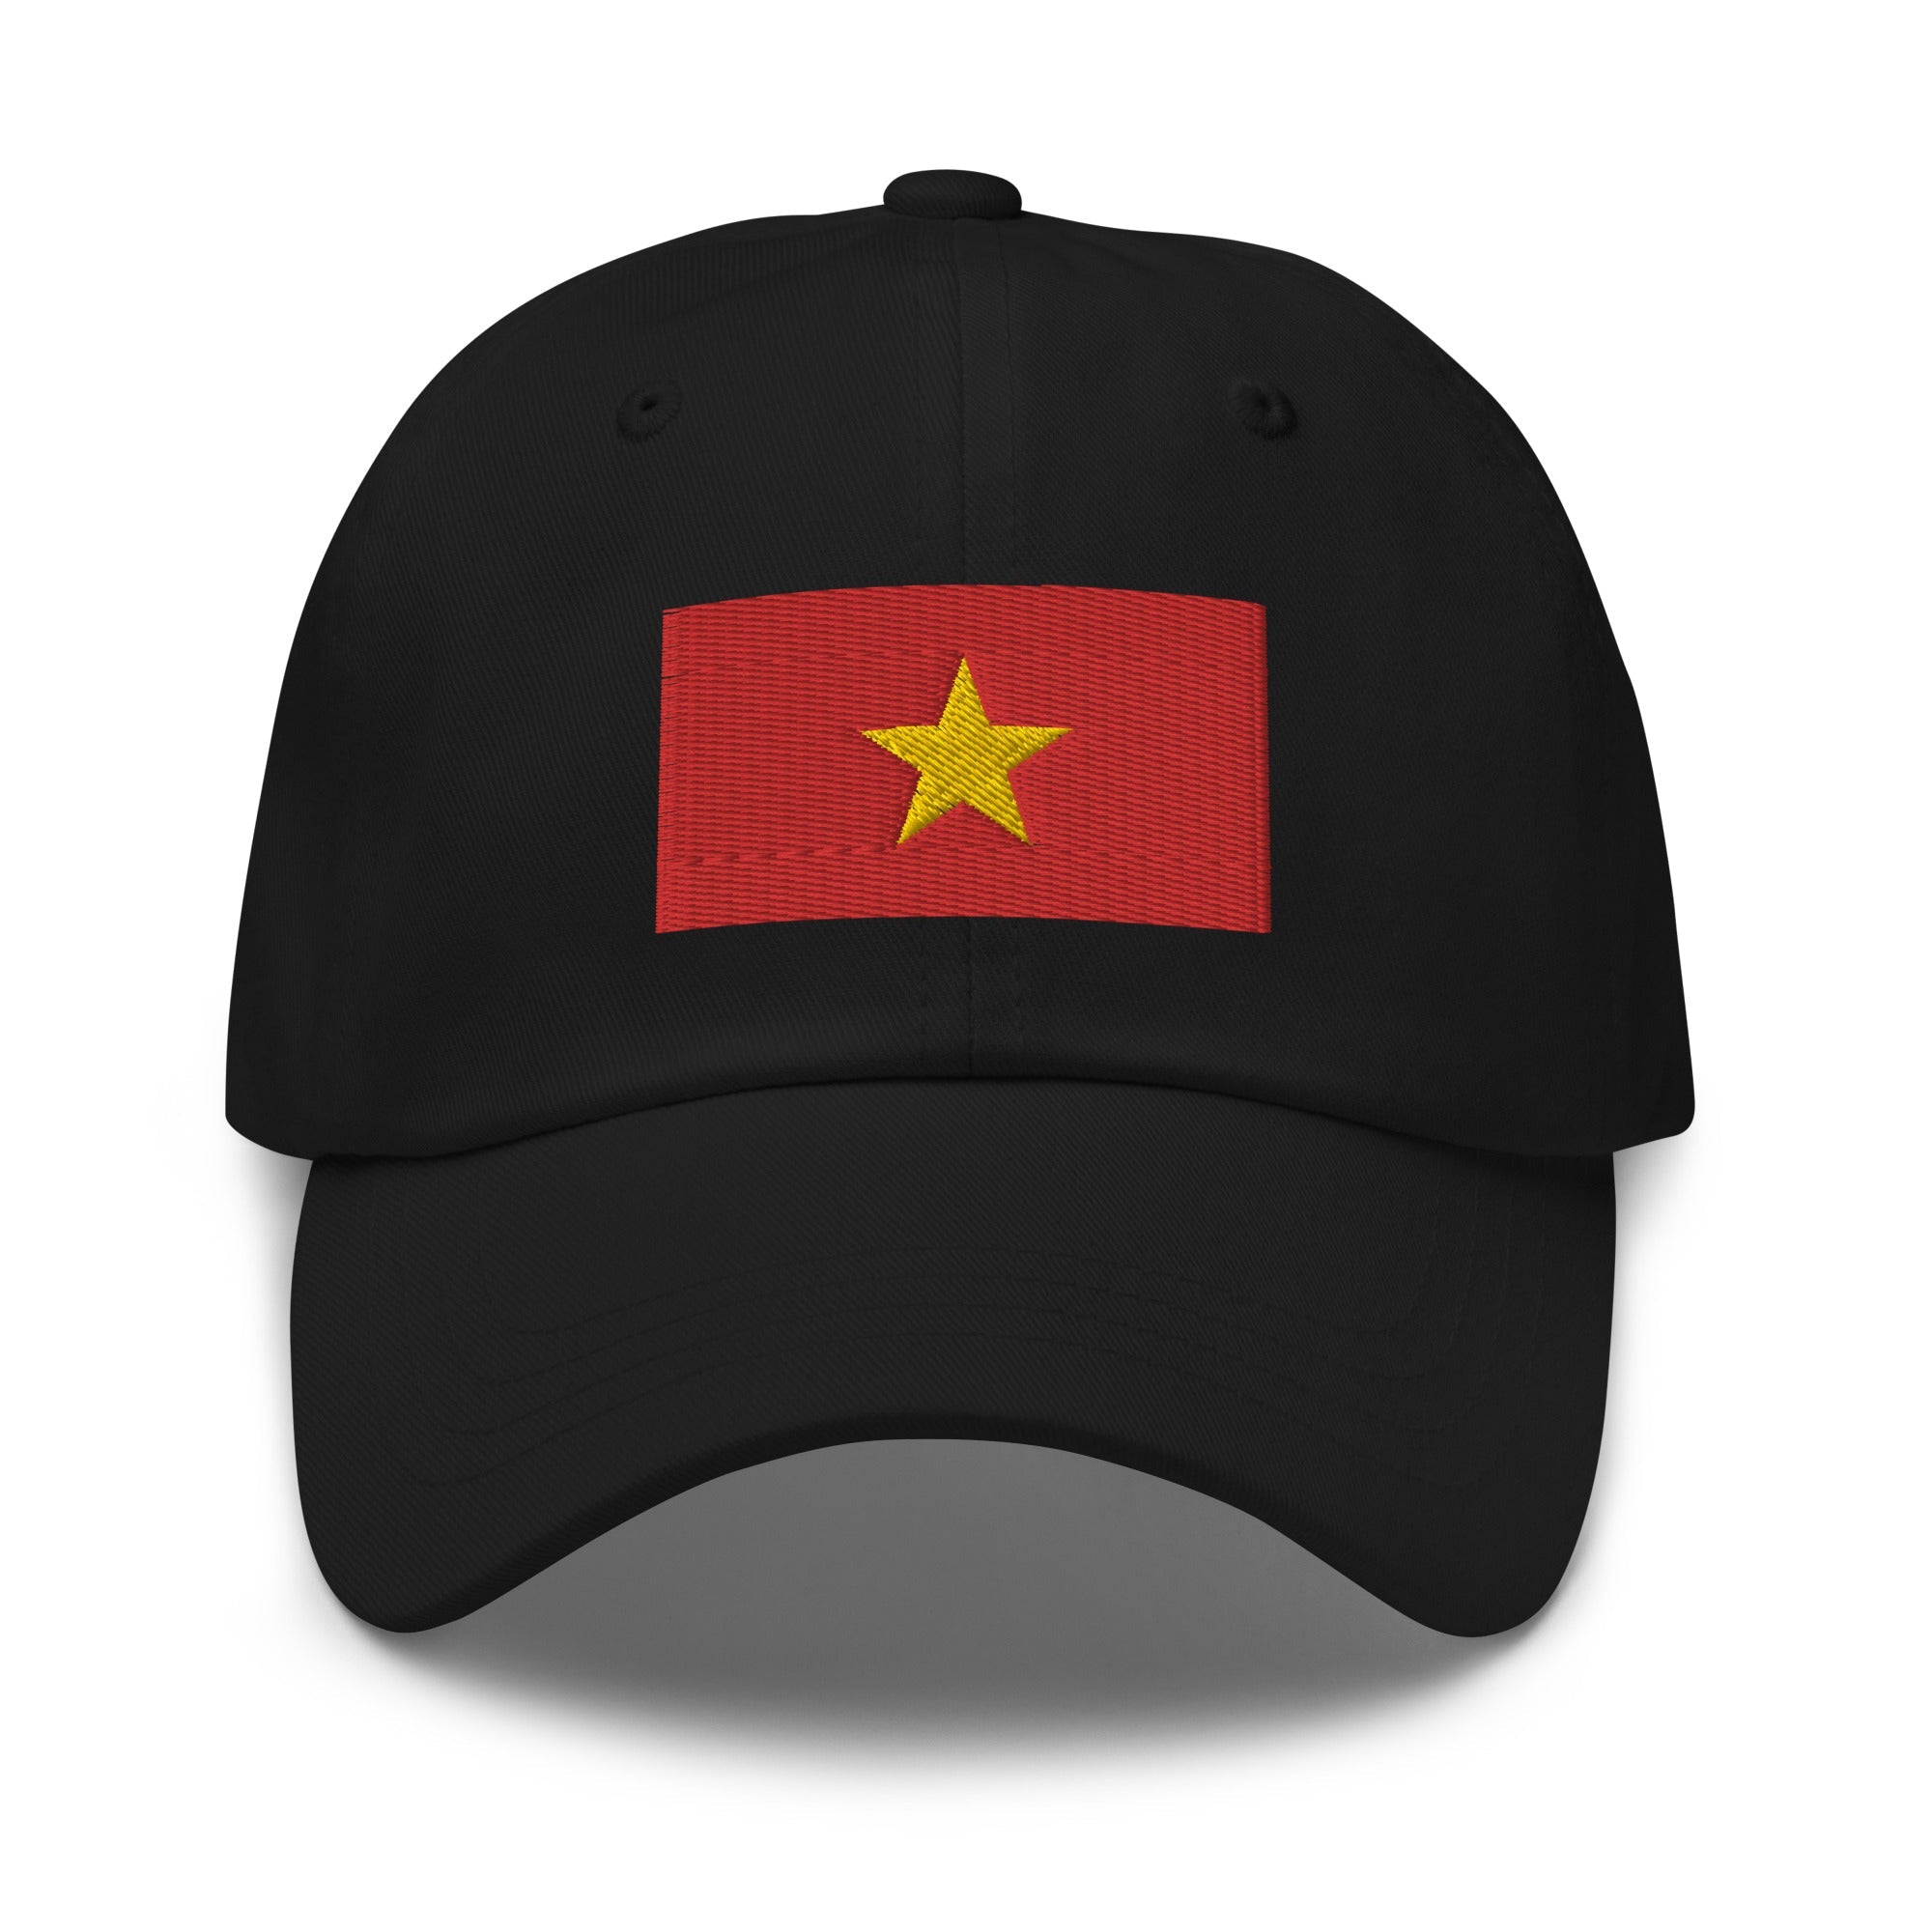 Vietnam Flag Cap - Adjustable Embroidered Dad Hat